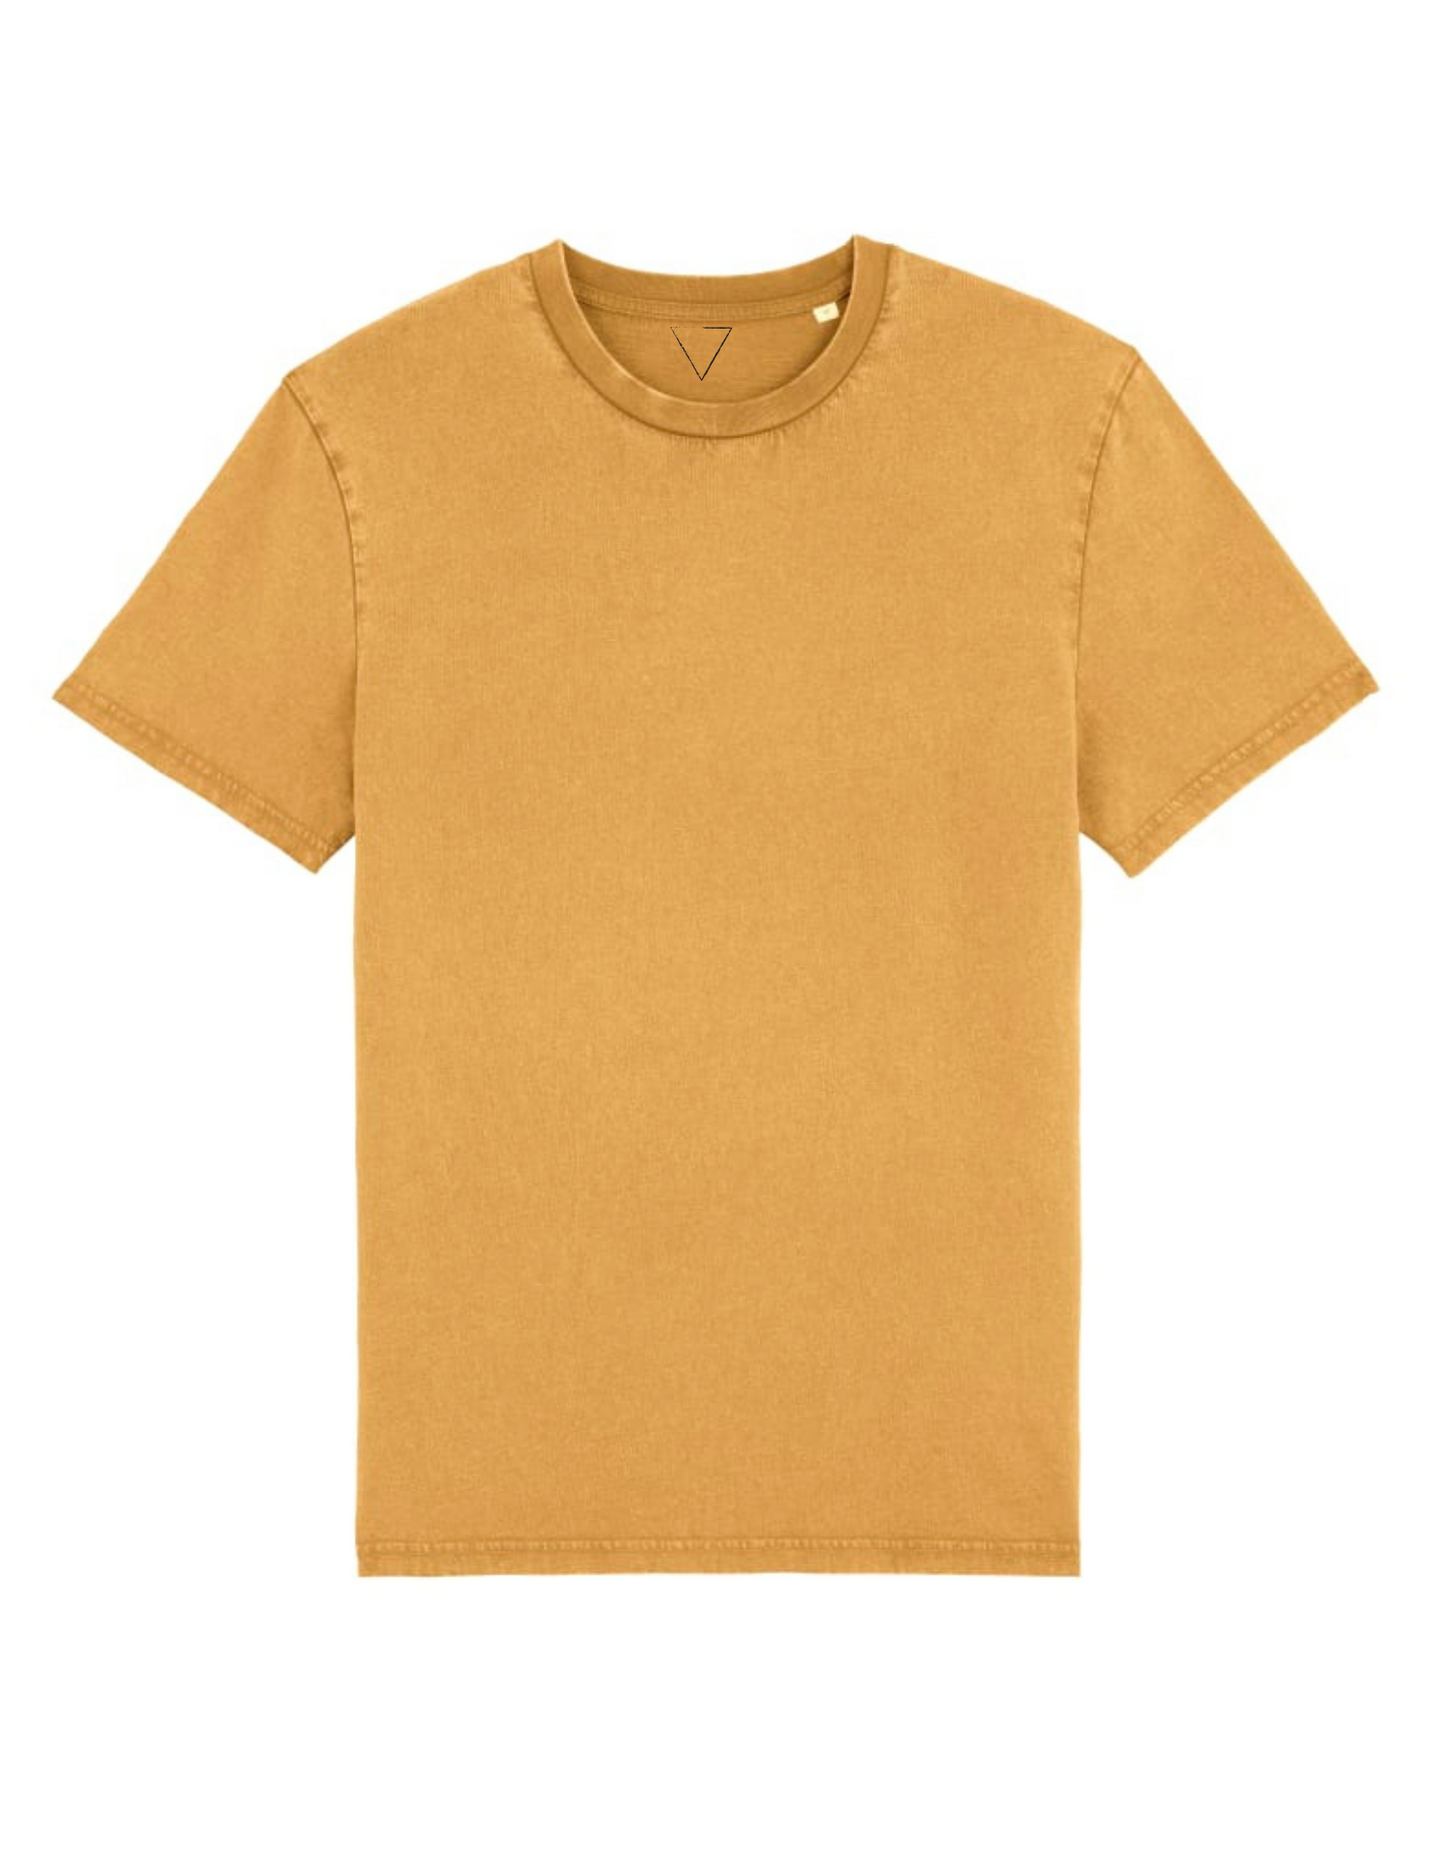 Essential dyed | T-shirt tingida